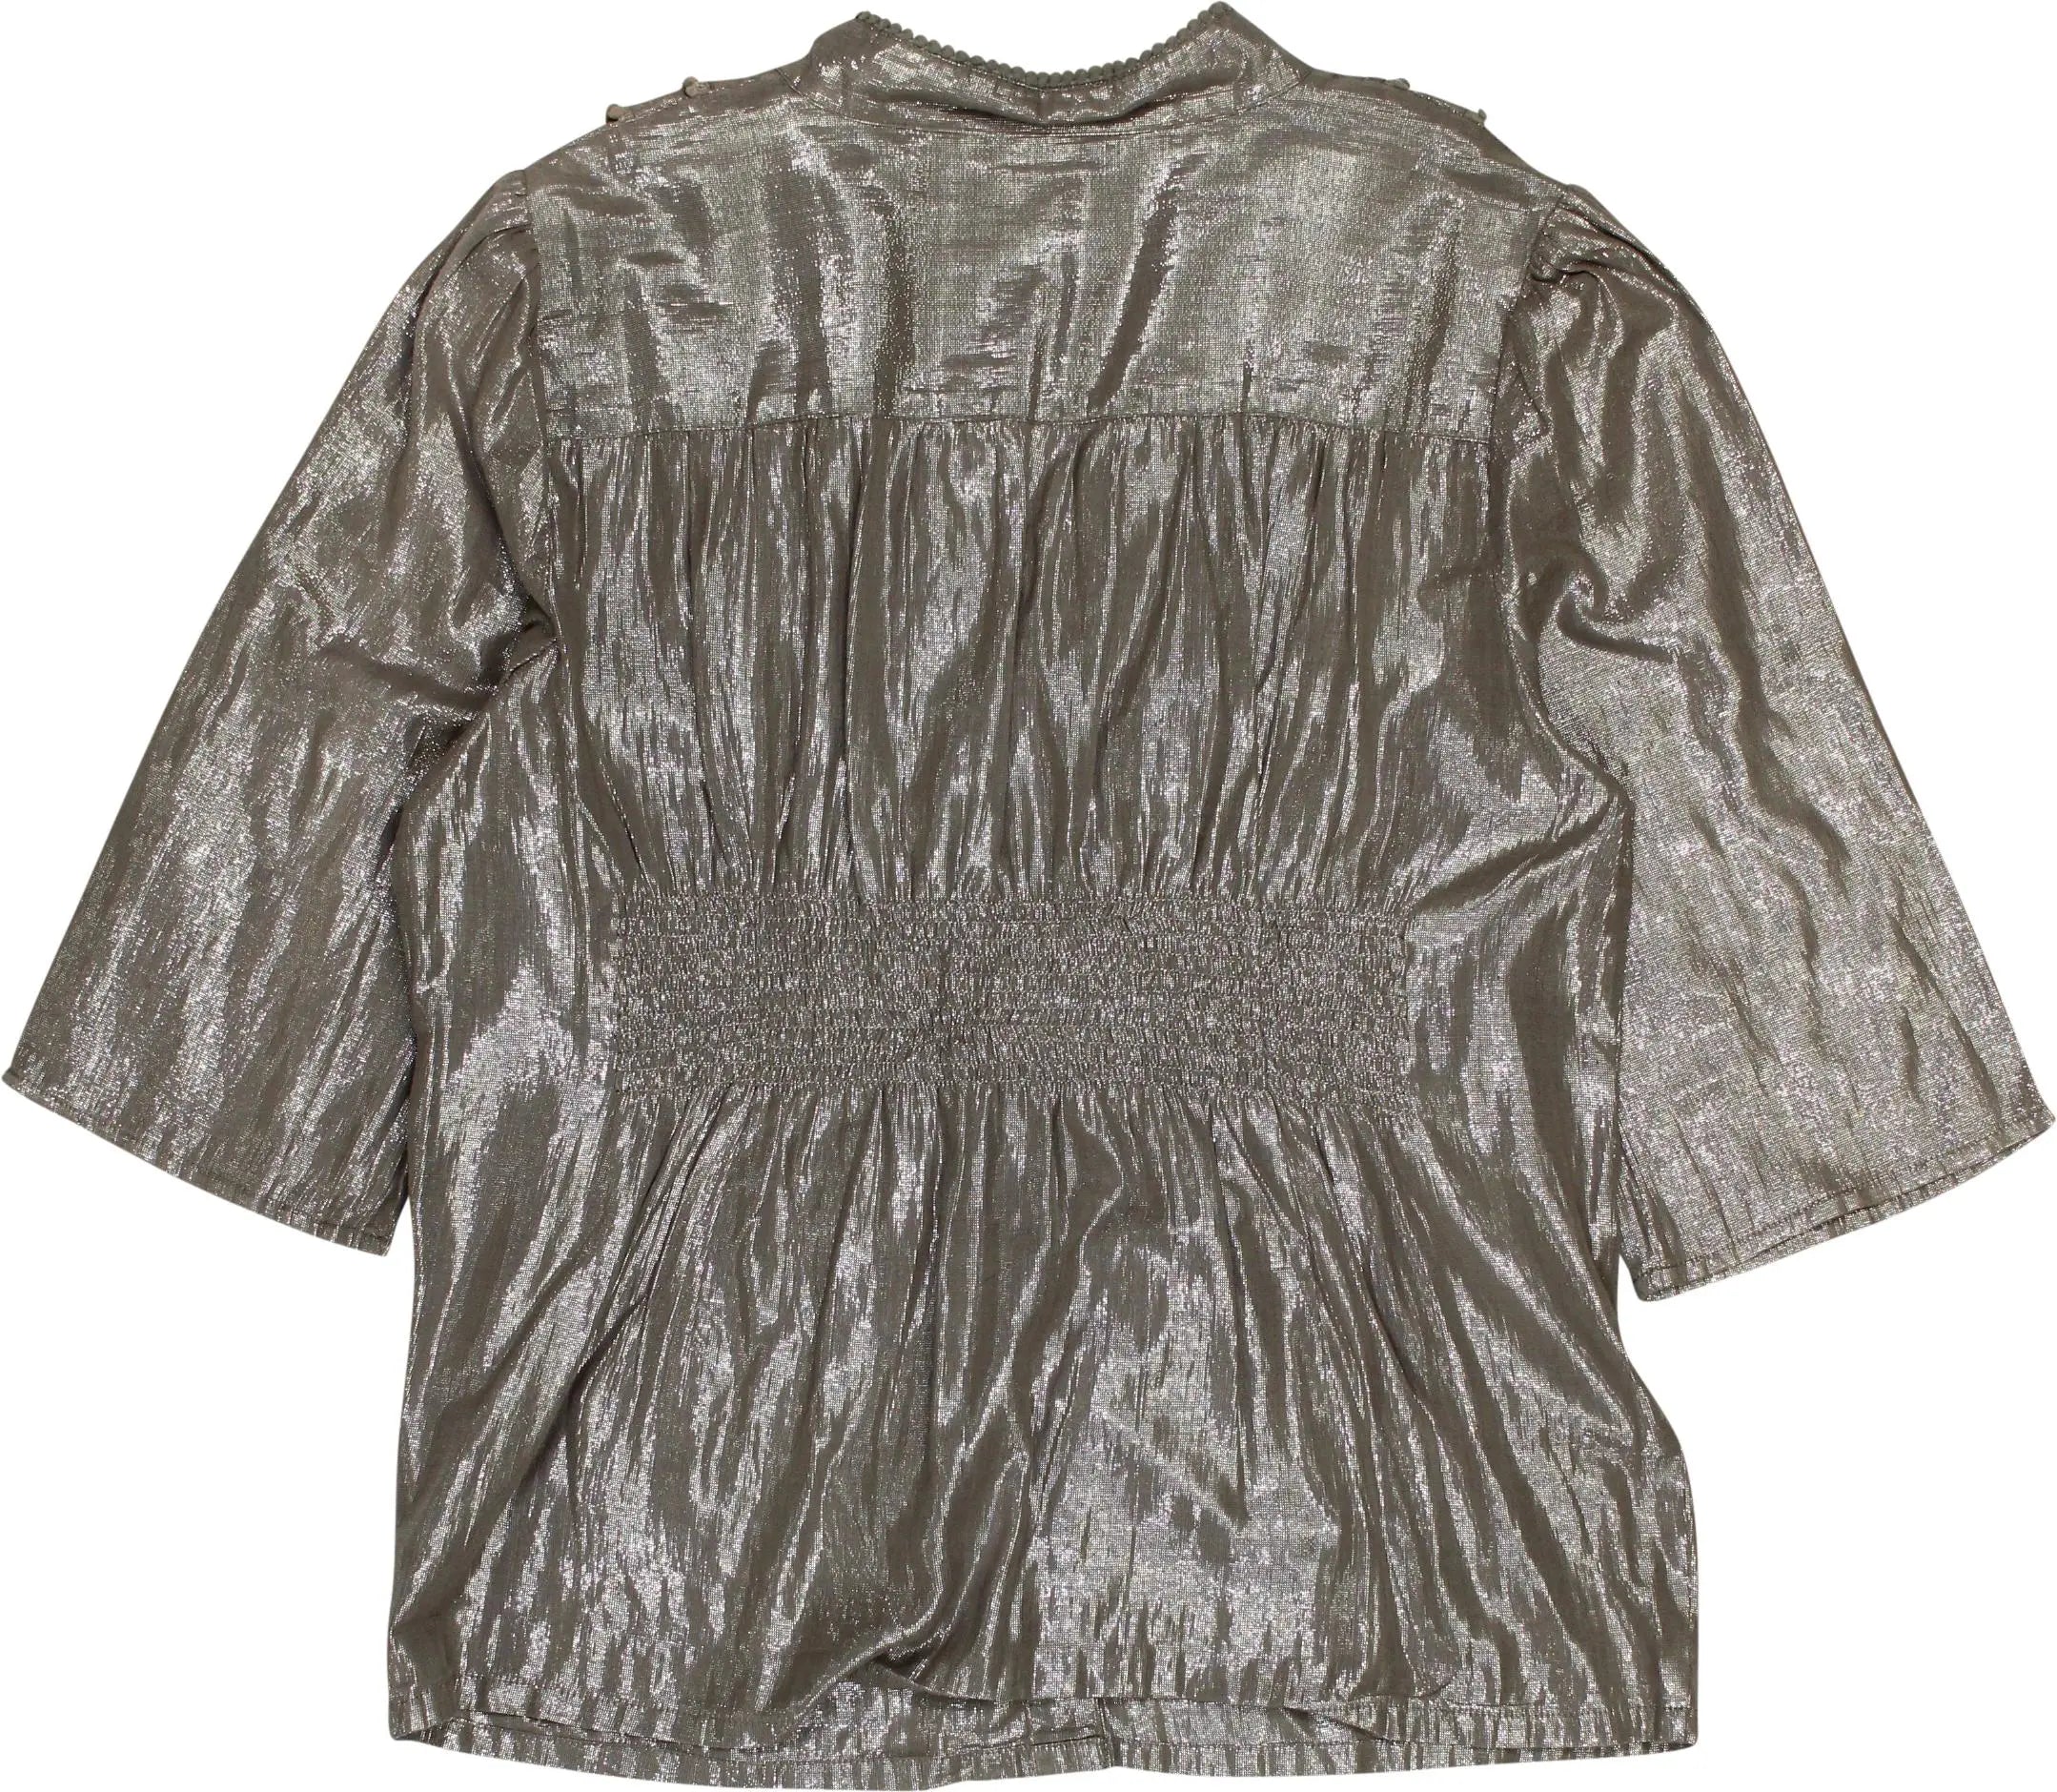 Zigga - Metallic Blouse- ThriftTale.com - Vintage and second handclothing